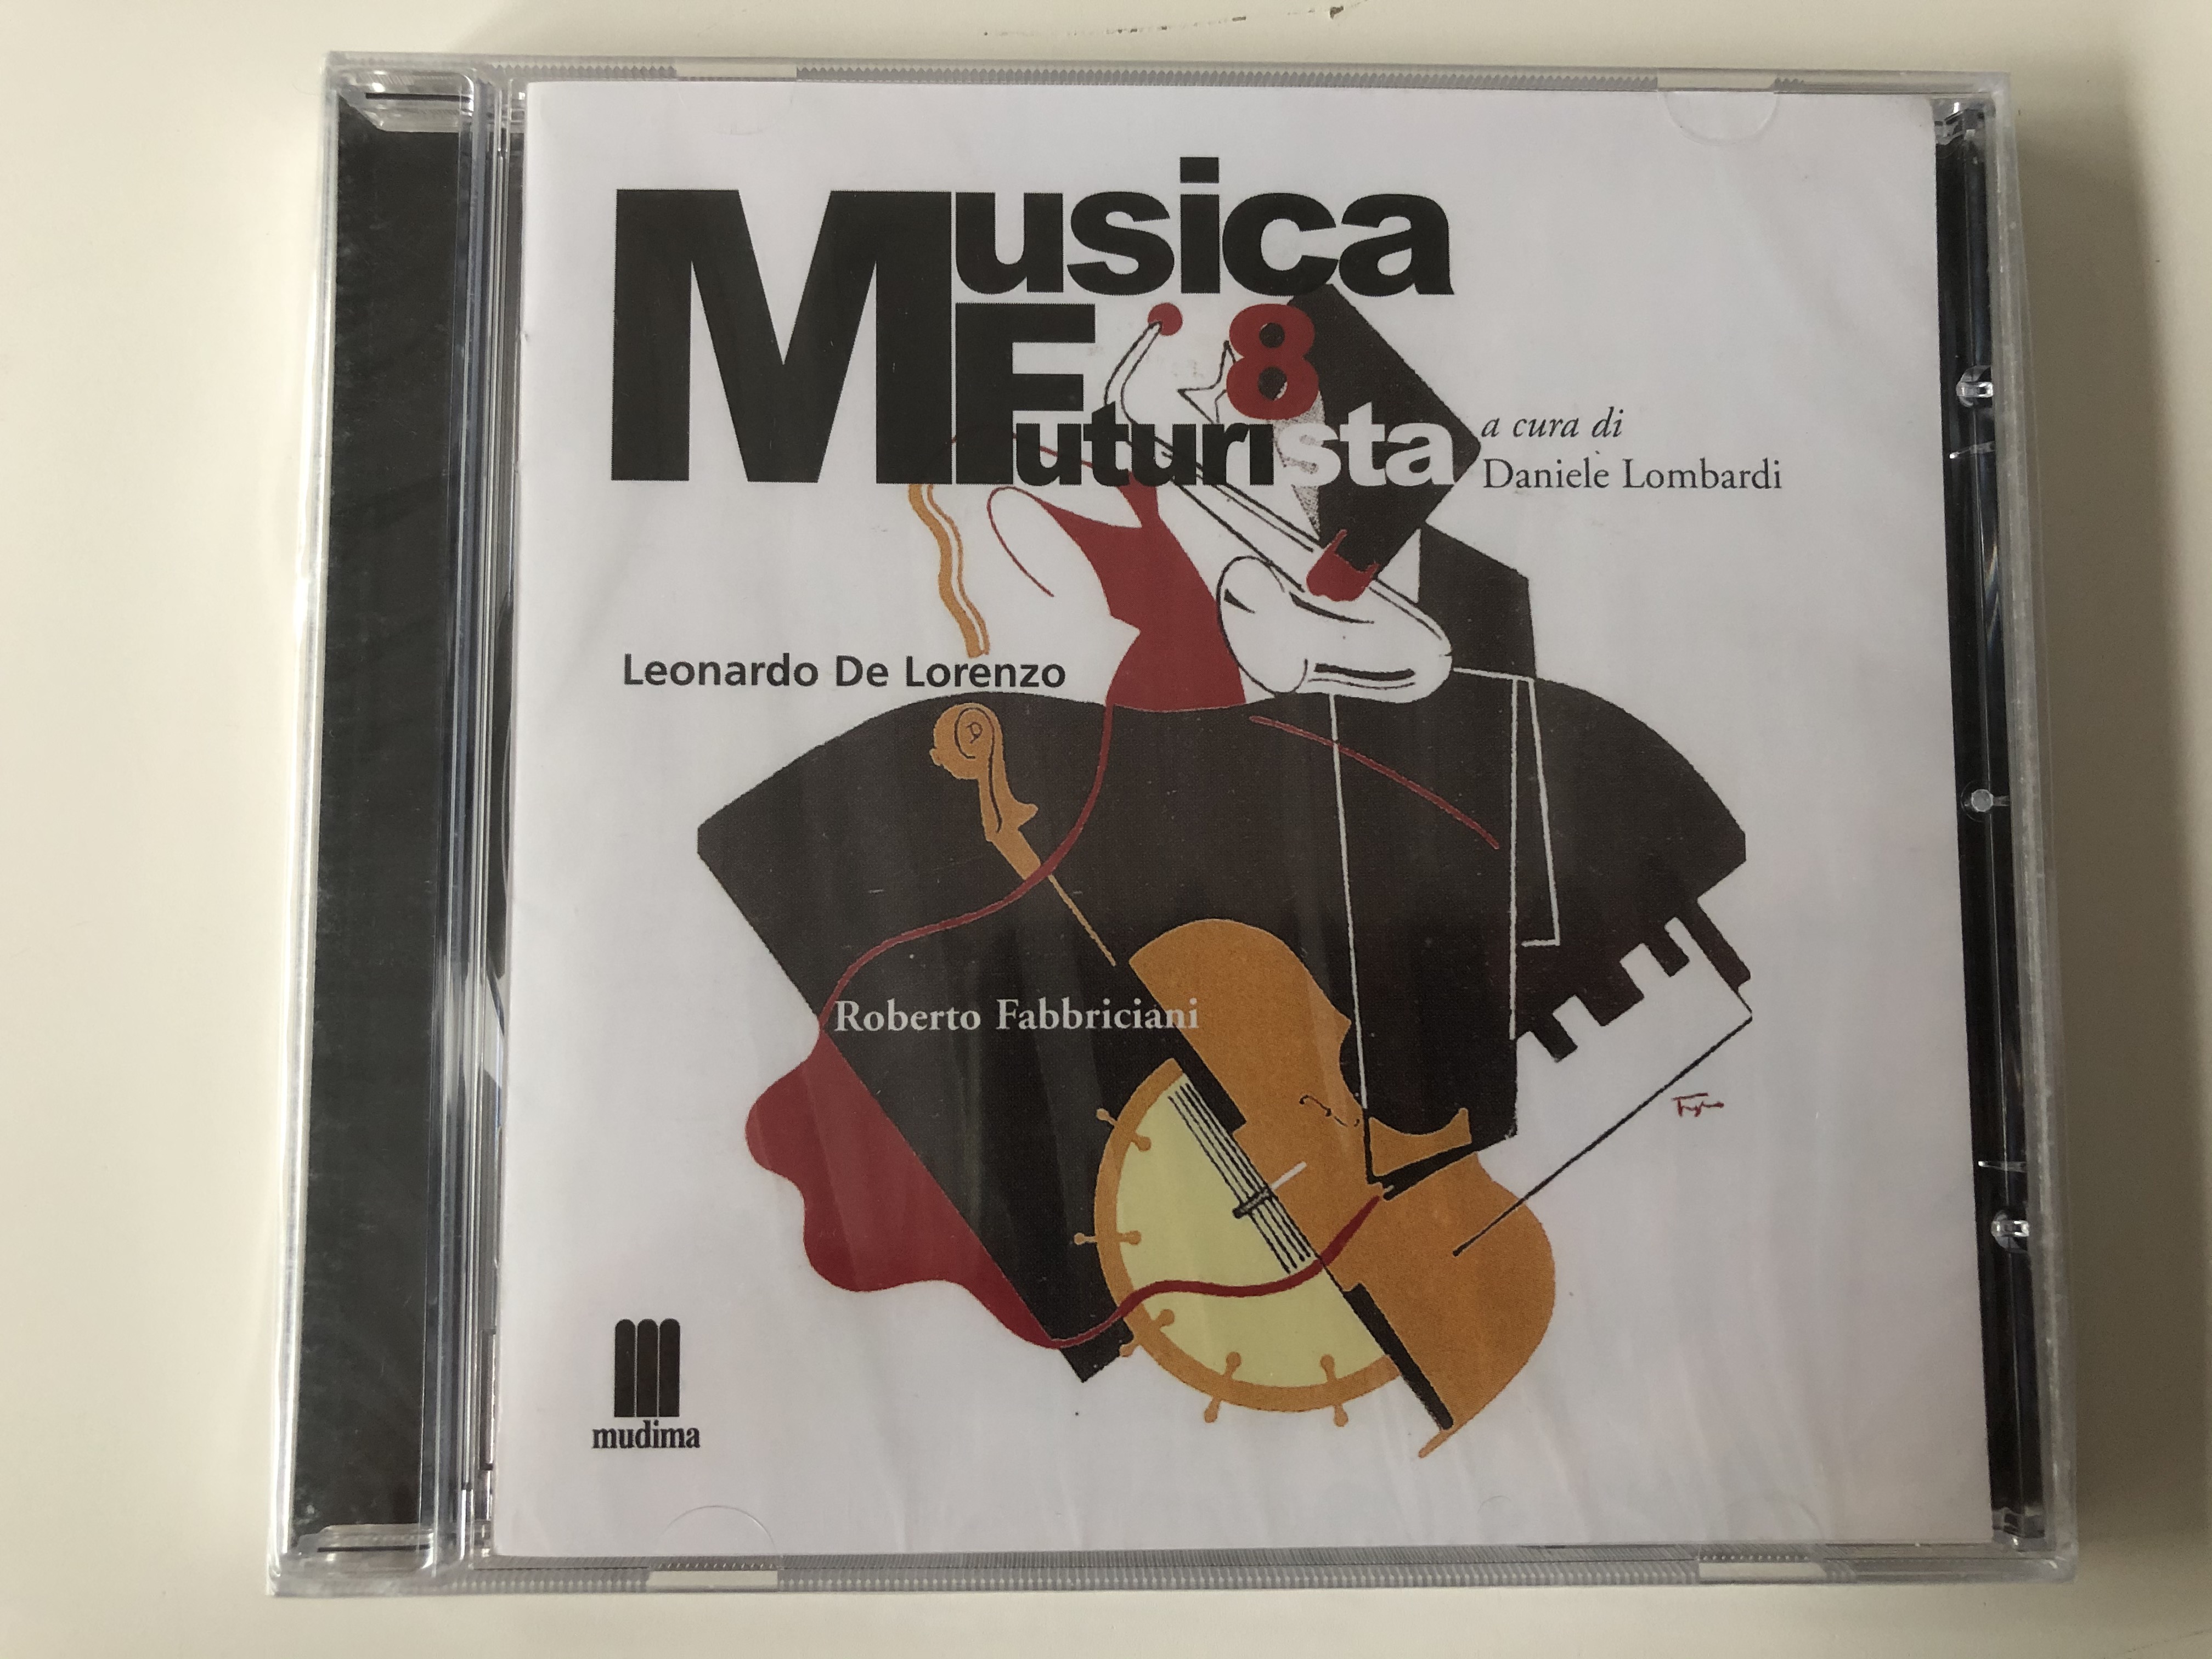 musica-futurista-8-a-cura-di-daniele-lombardi-leonardo-de-lorenzo-roberto-fabbriciani-mudima-ed.-musicali-audio-cd-2010-8033224410333-1-.jpg